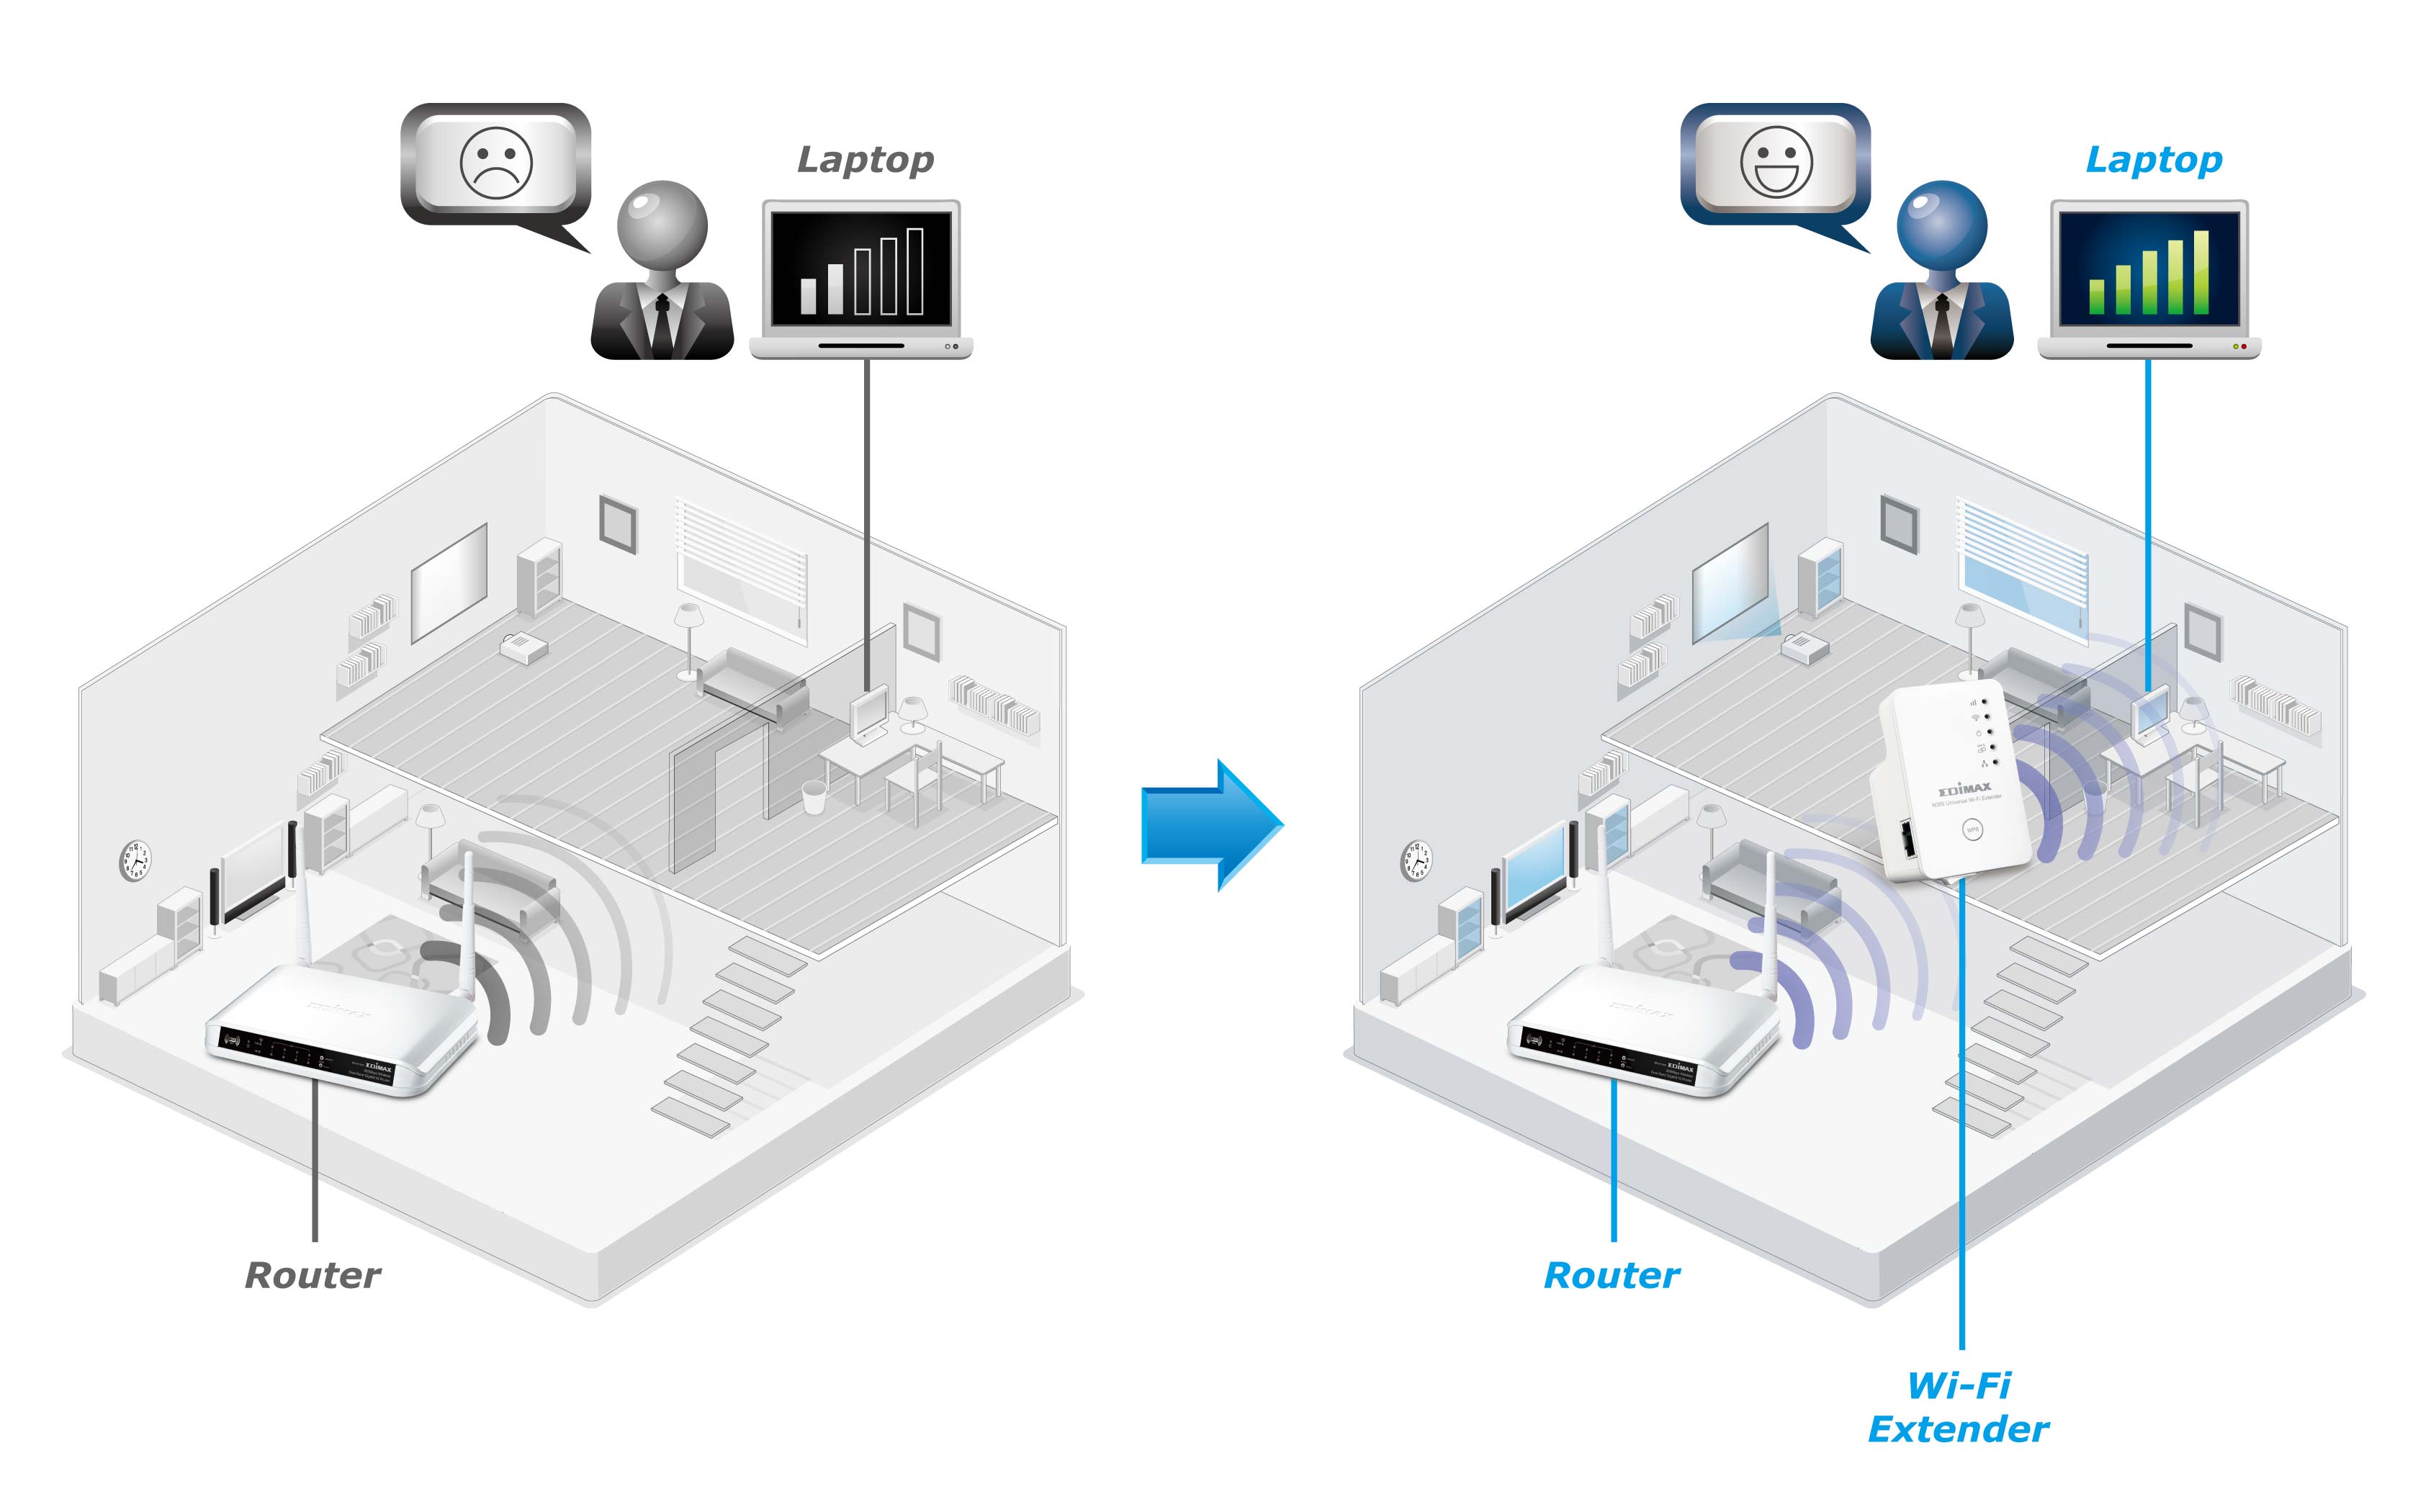 Edimax EW-7438RPn N300 Universal Smart Wi-Fi Extender/Access Point EW-7438RPn double the Wi-Fi coverage